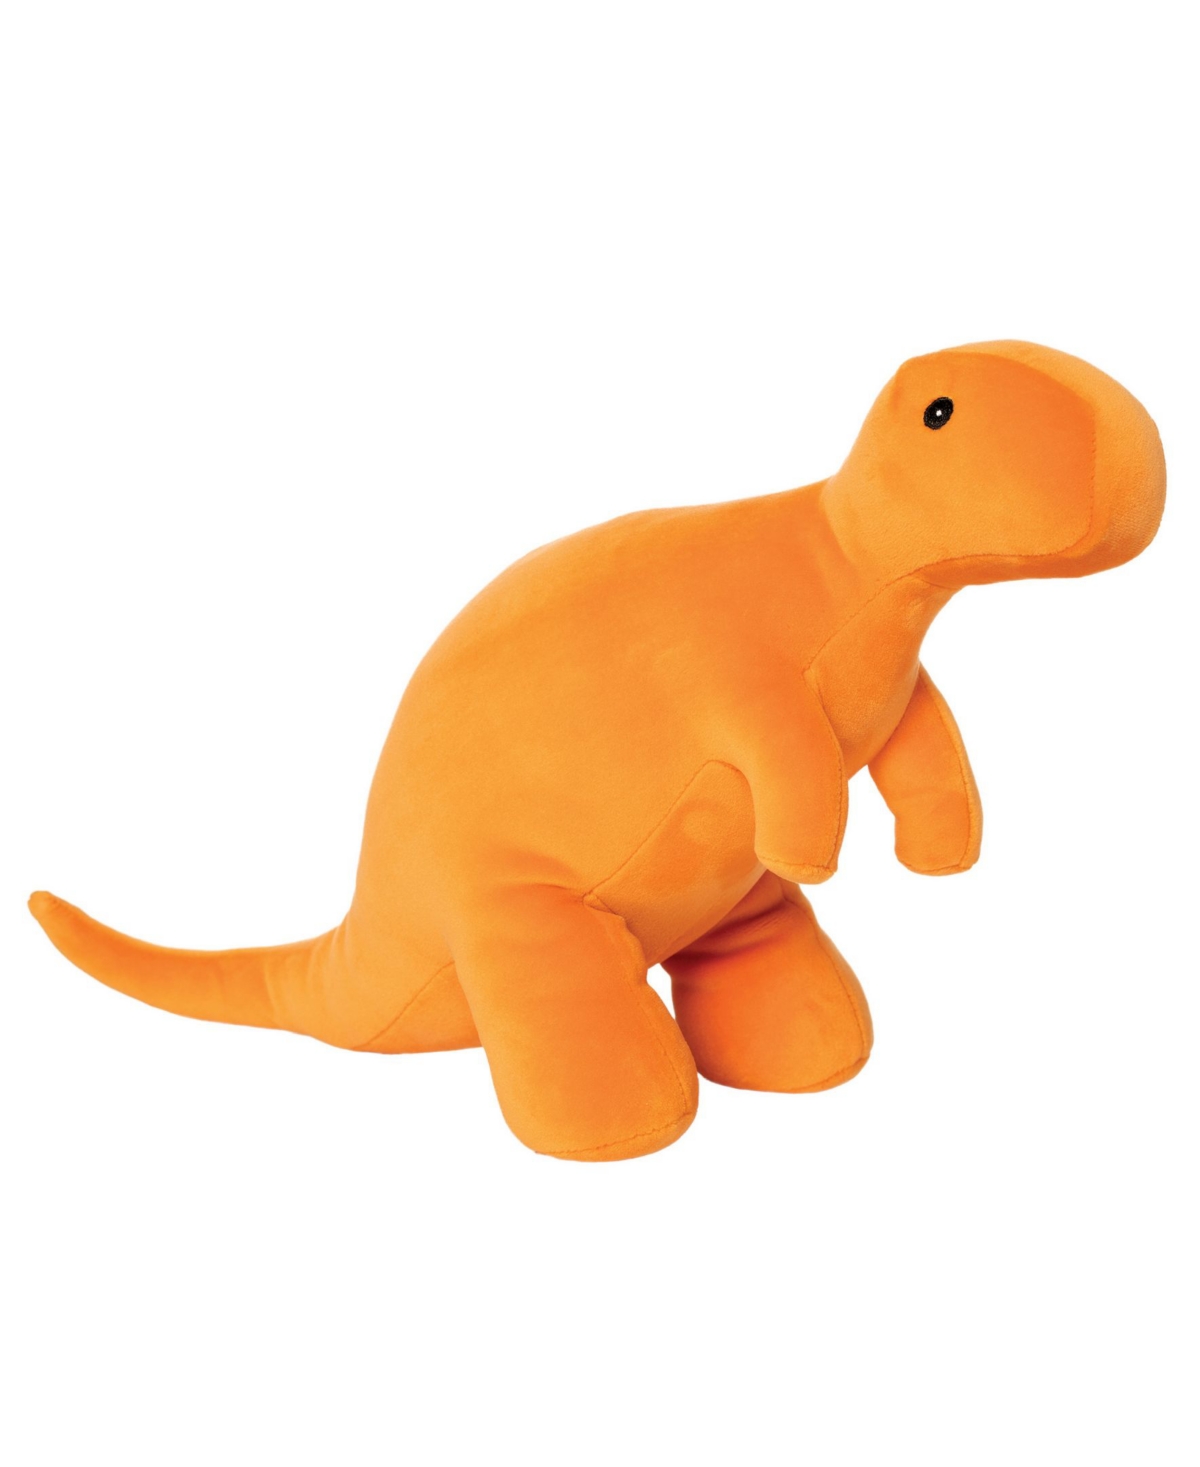 First & Main Manhattan Toy Company Growly Velveteen-textured T-rex Dinosaur Stuffed Animal, 11" In Orange